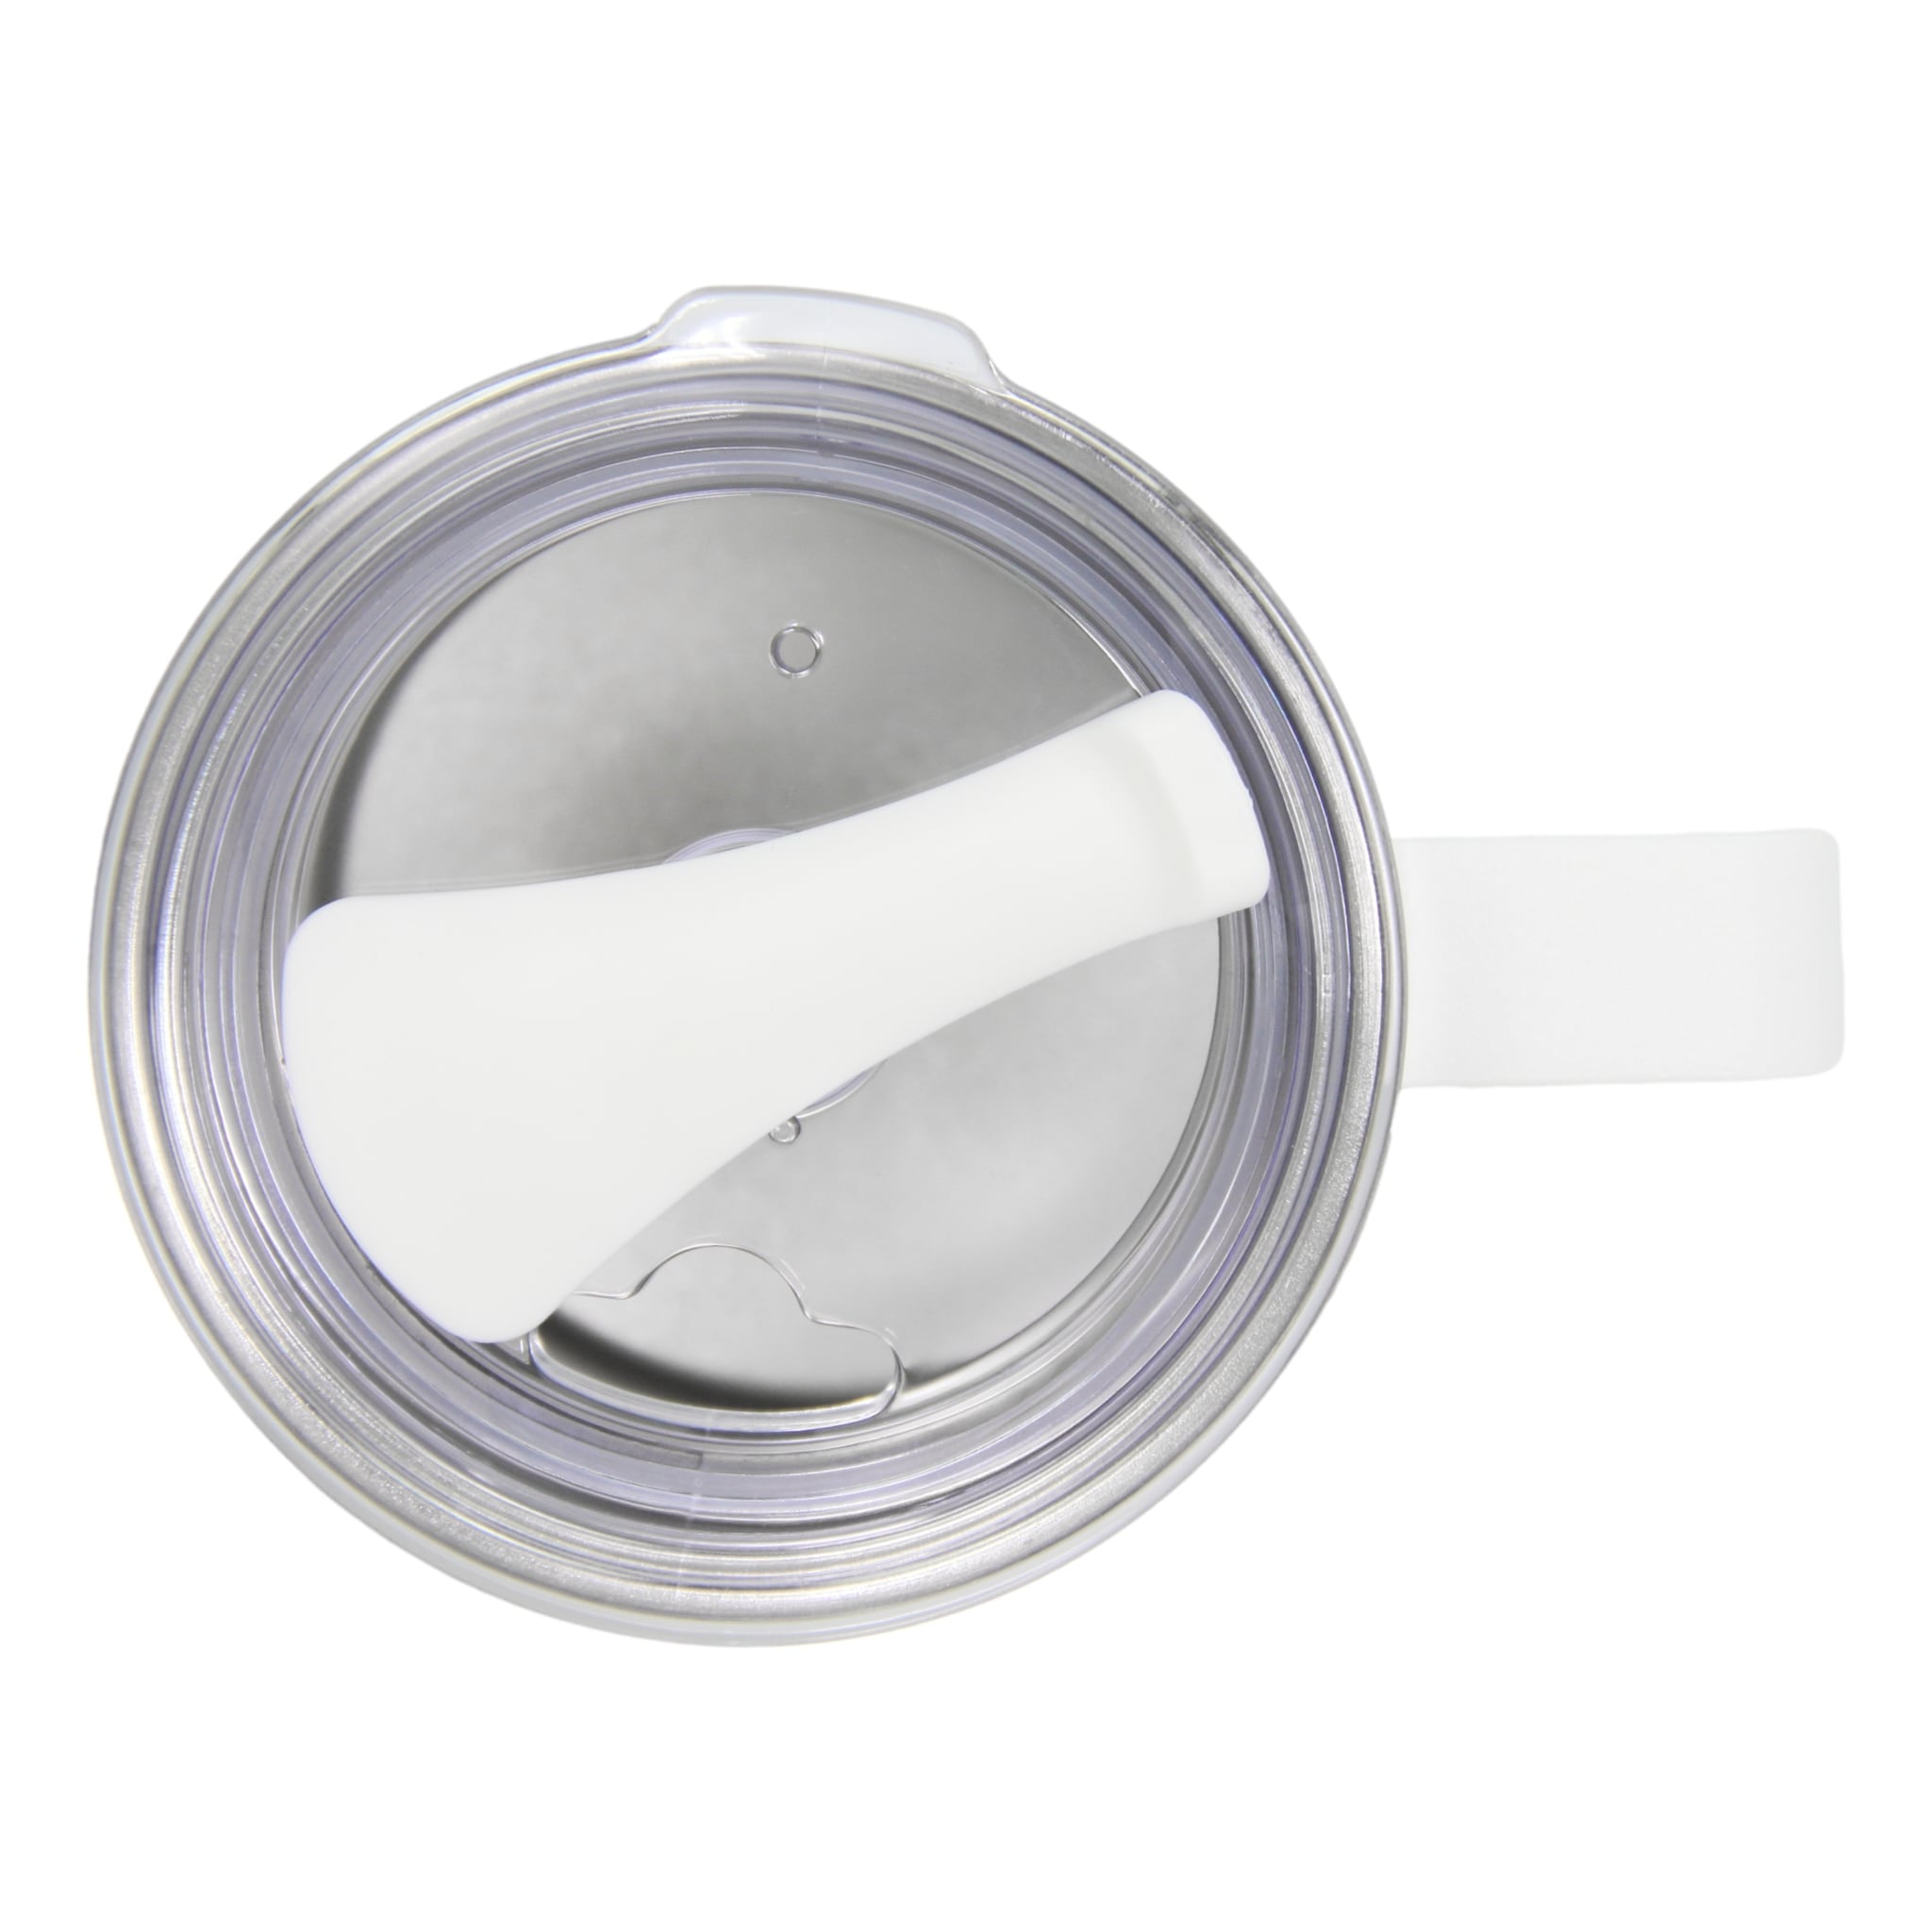 Tumbler & Mug Insulated Drinkware - 14oz - (White)